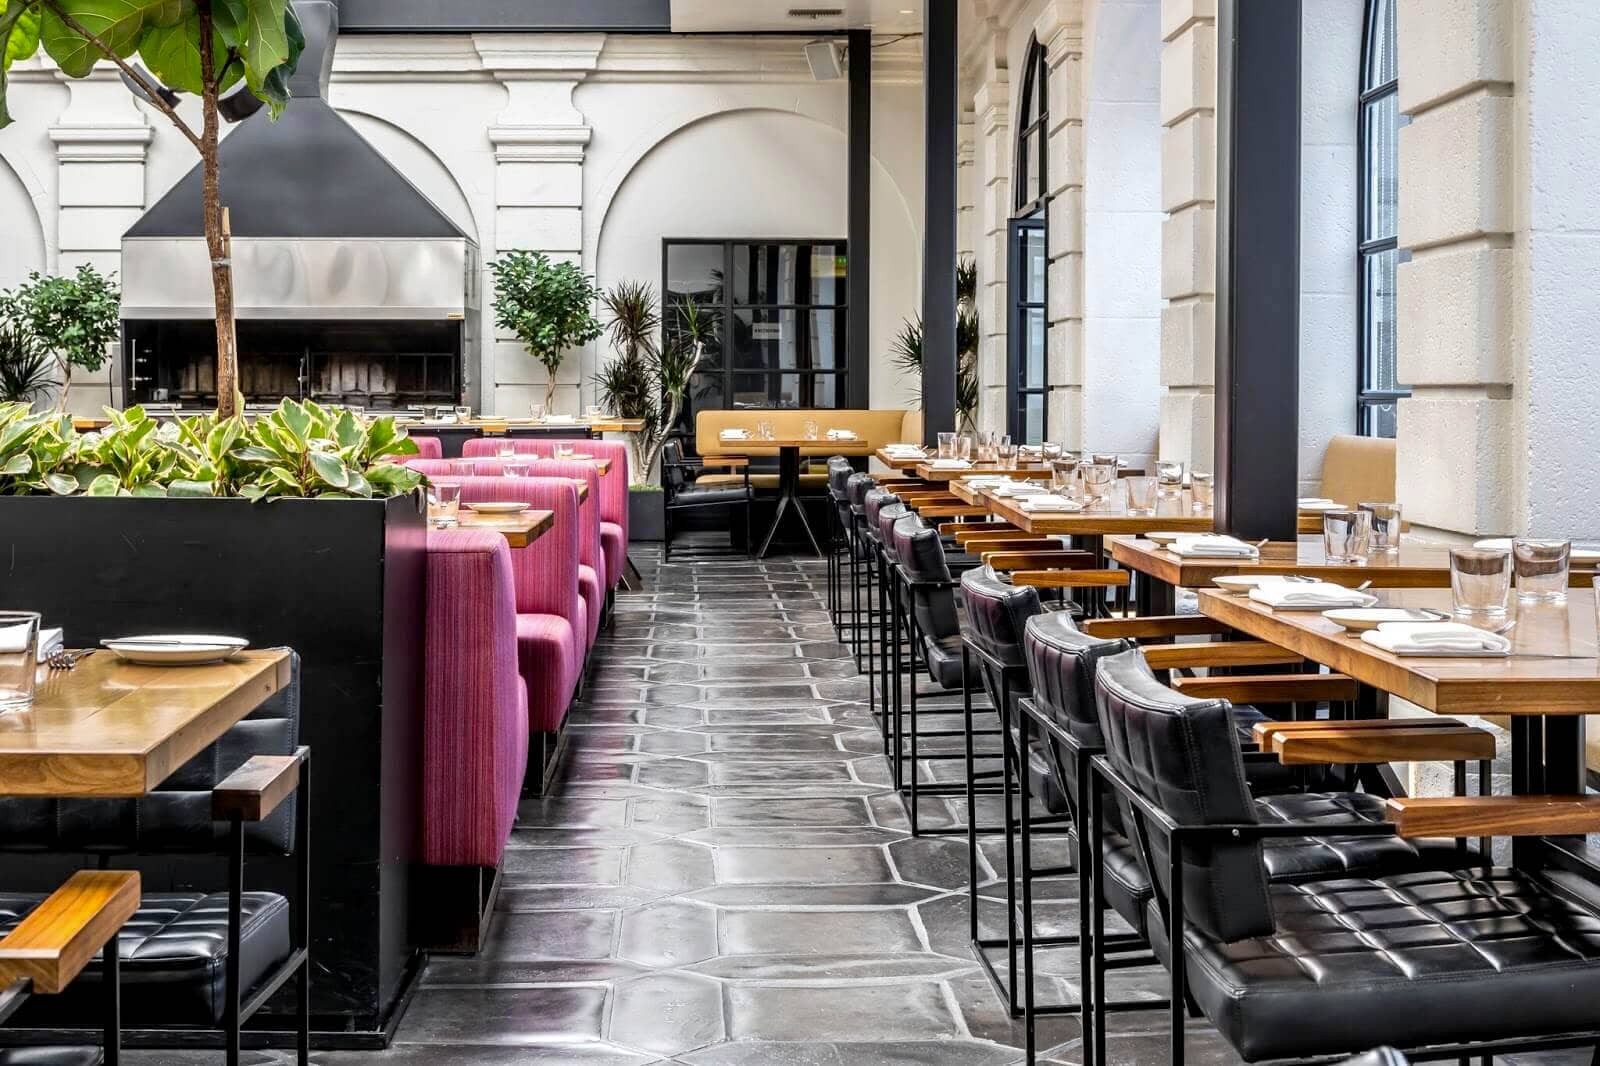 Elegant restaurant with adapted picket fence floor tile pattern